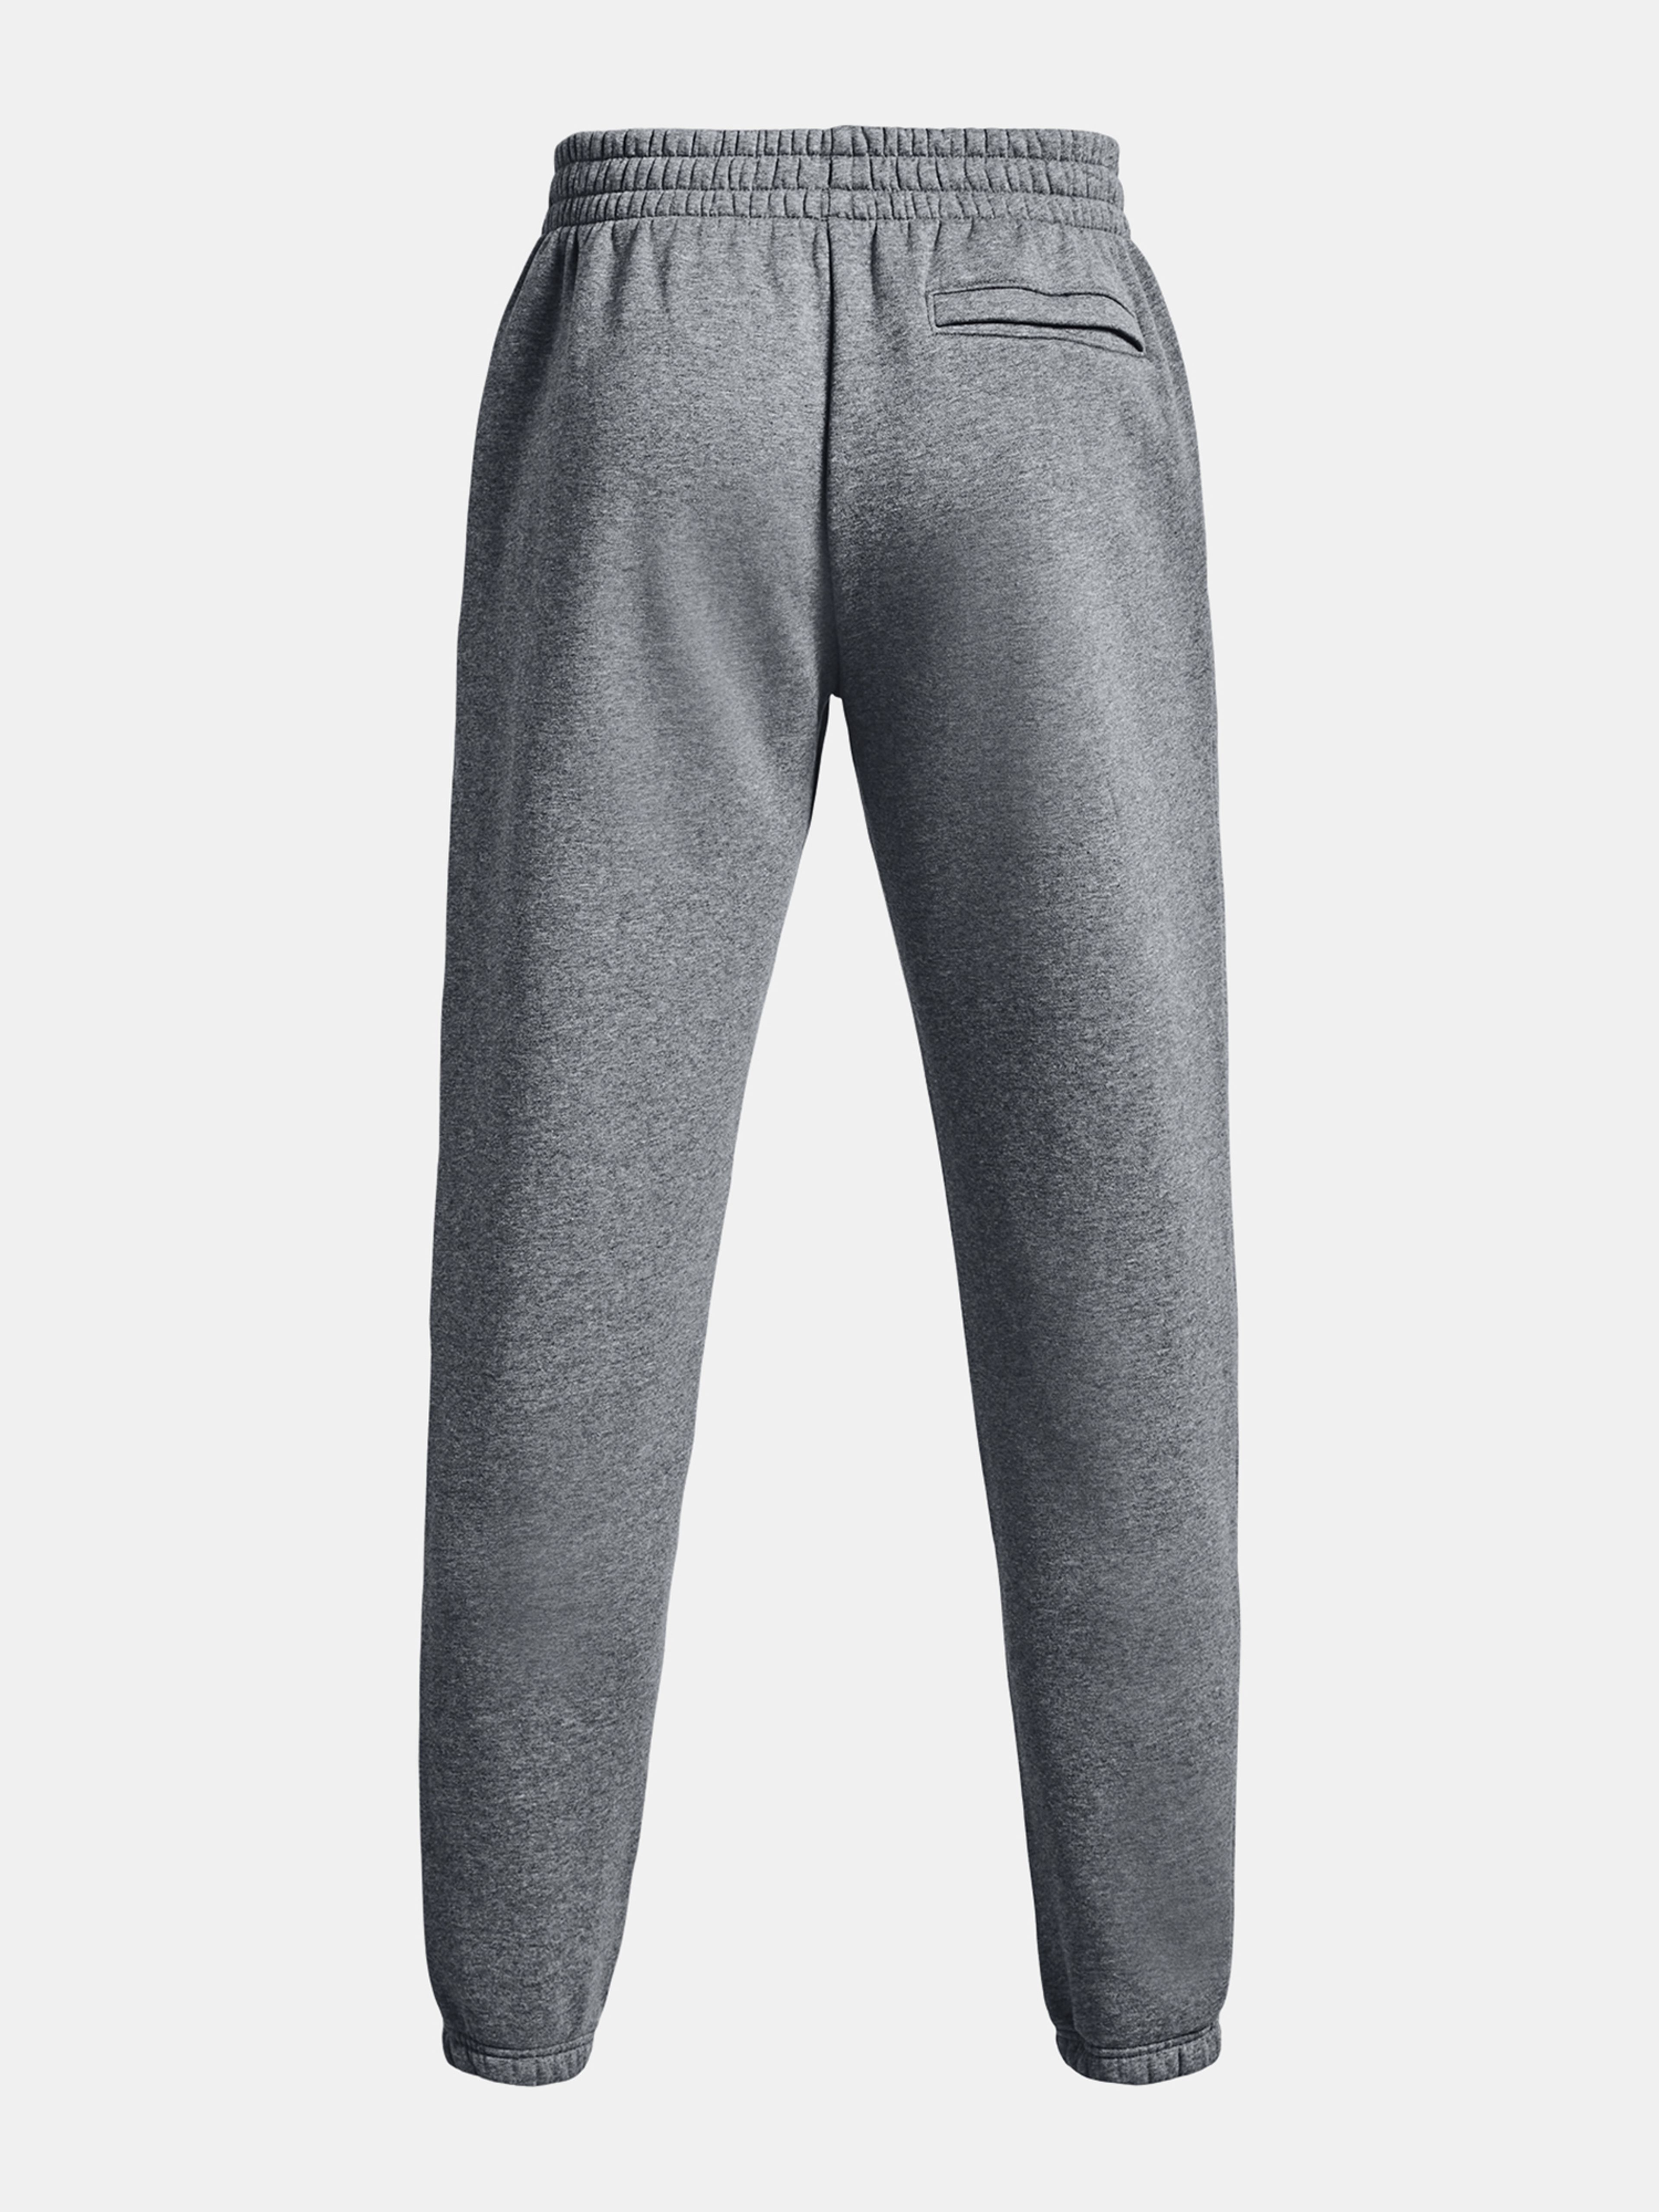  UA Essential Fleece Jogger, Black - men's sweatpants - UNDER  ARMOUR - 49.72 € - outdoorové oblečení a vybavení shop